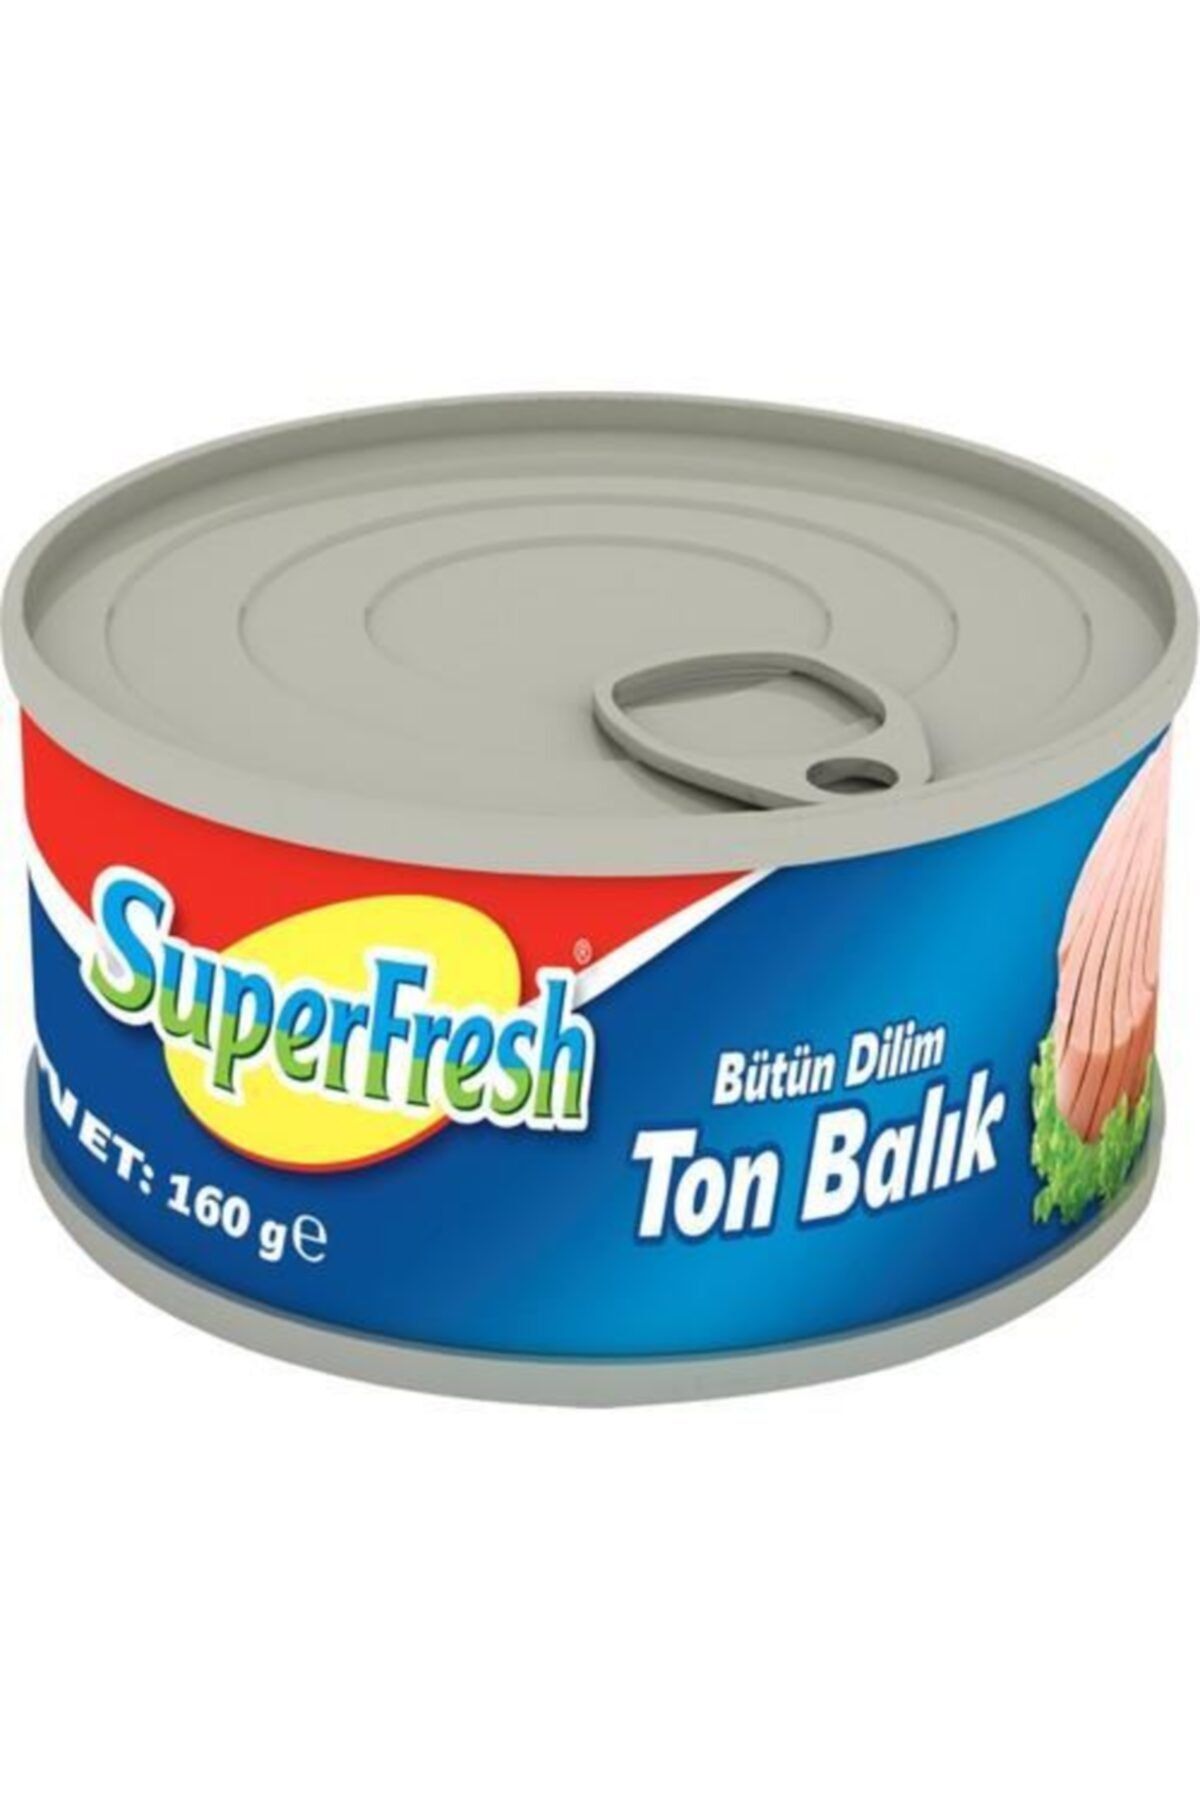 SuperFresh Ton Balık 150 Gr.*24 Ad.